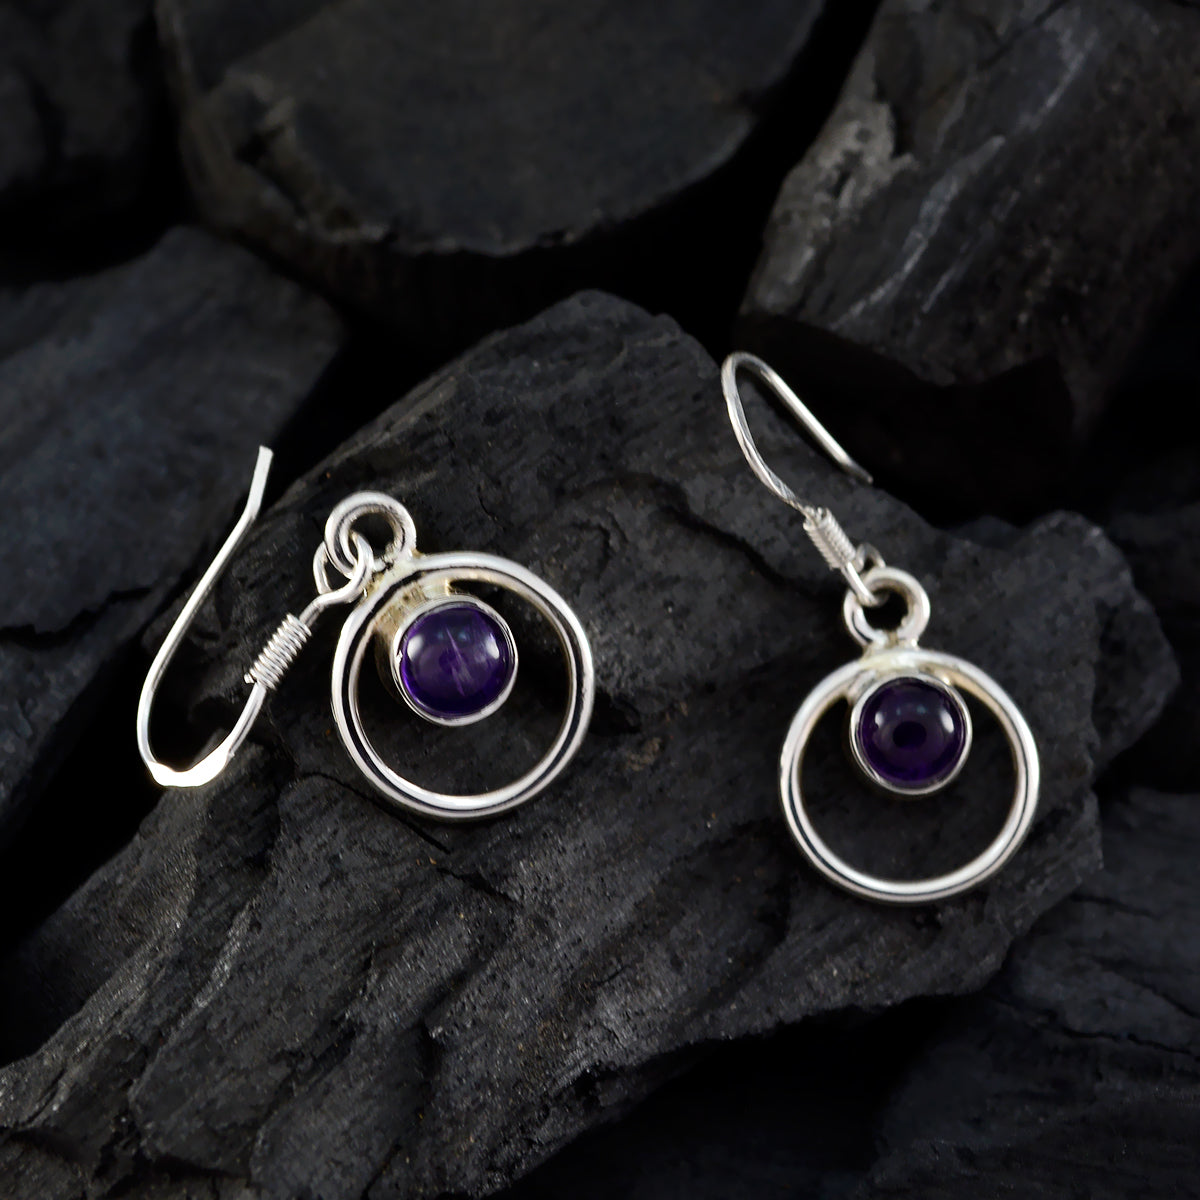 Riyo Nice Gemstone round Cabochon Purple Amethyst Silver Earrings gift for cyber Monday